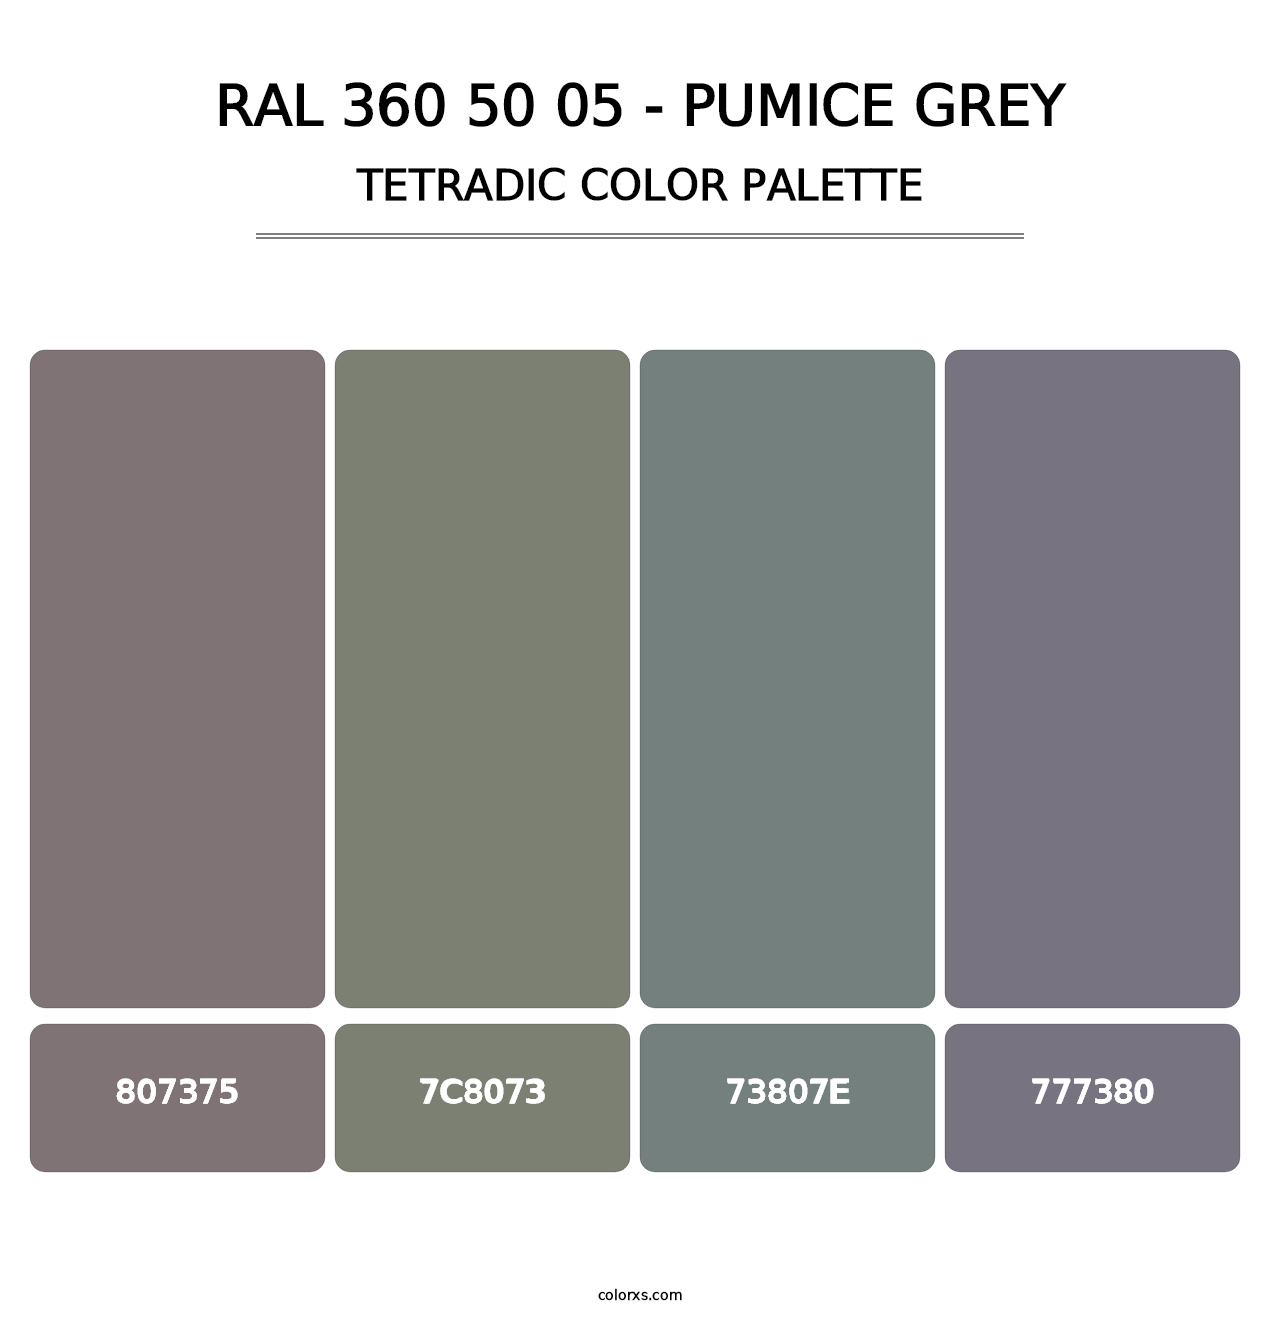 RAL 360 50 05 - Pumice Grey - Tetradic Color Palette